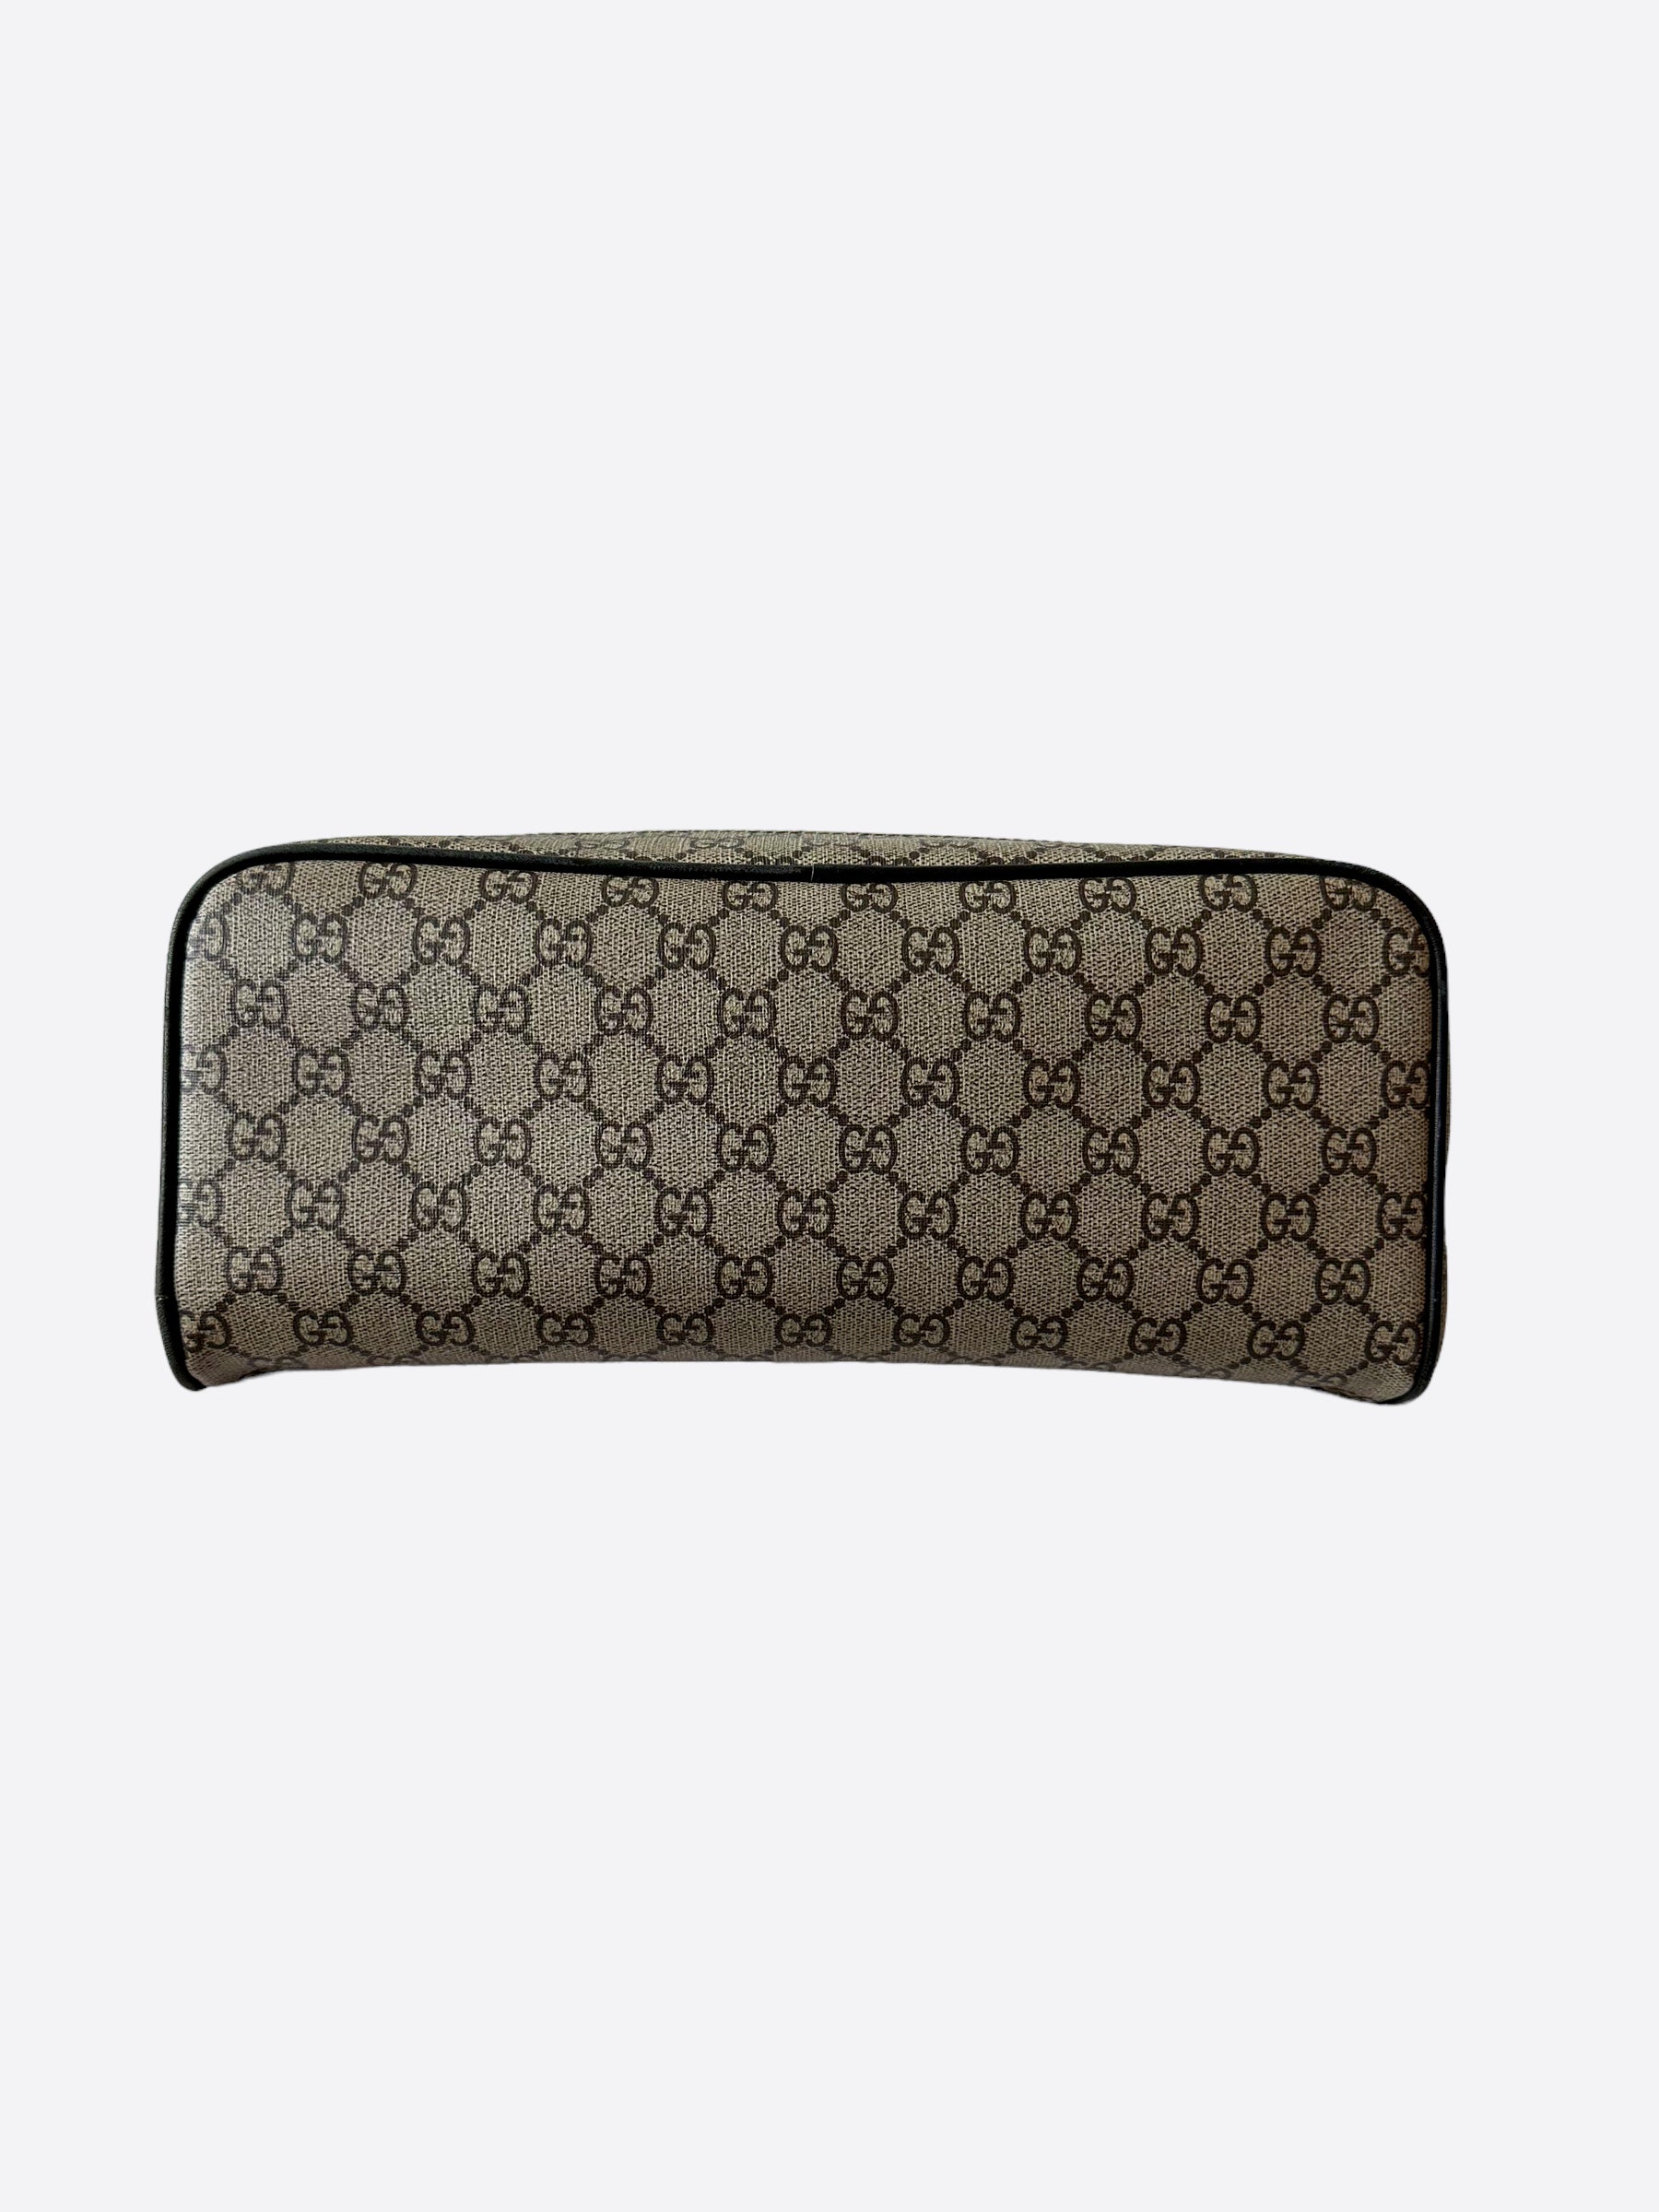 Gucci GG Supreme Leather Wash Bag - Brown for Men